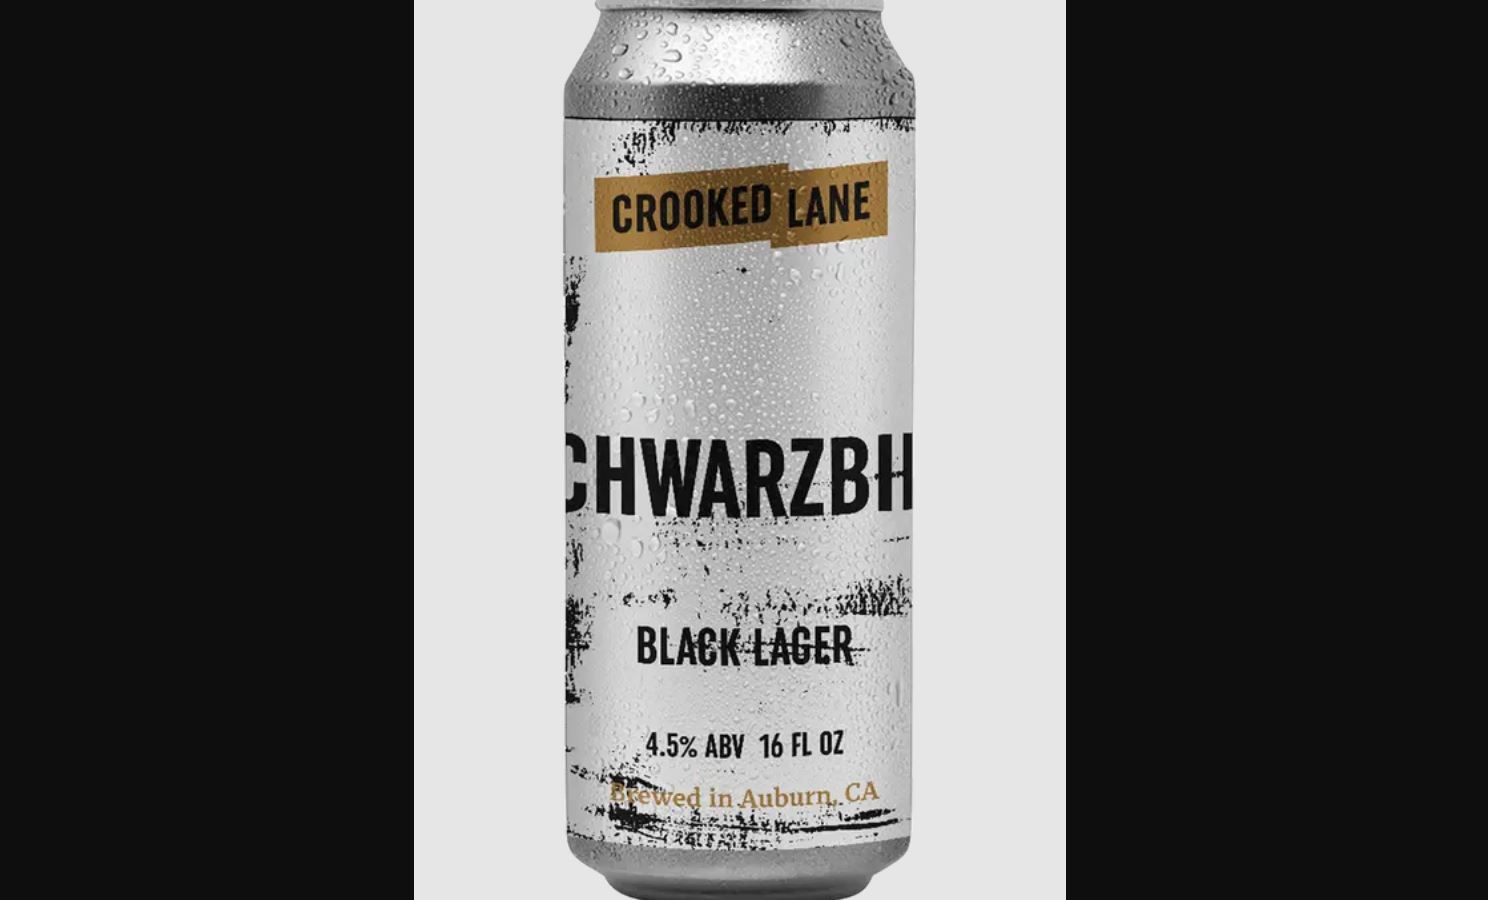 Crooked Lane Schwarzbier